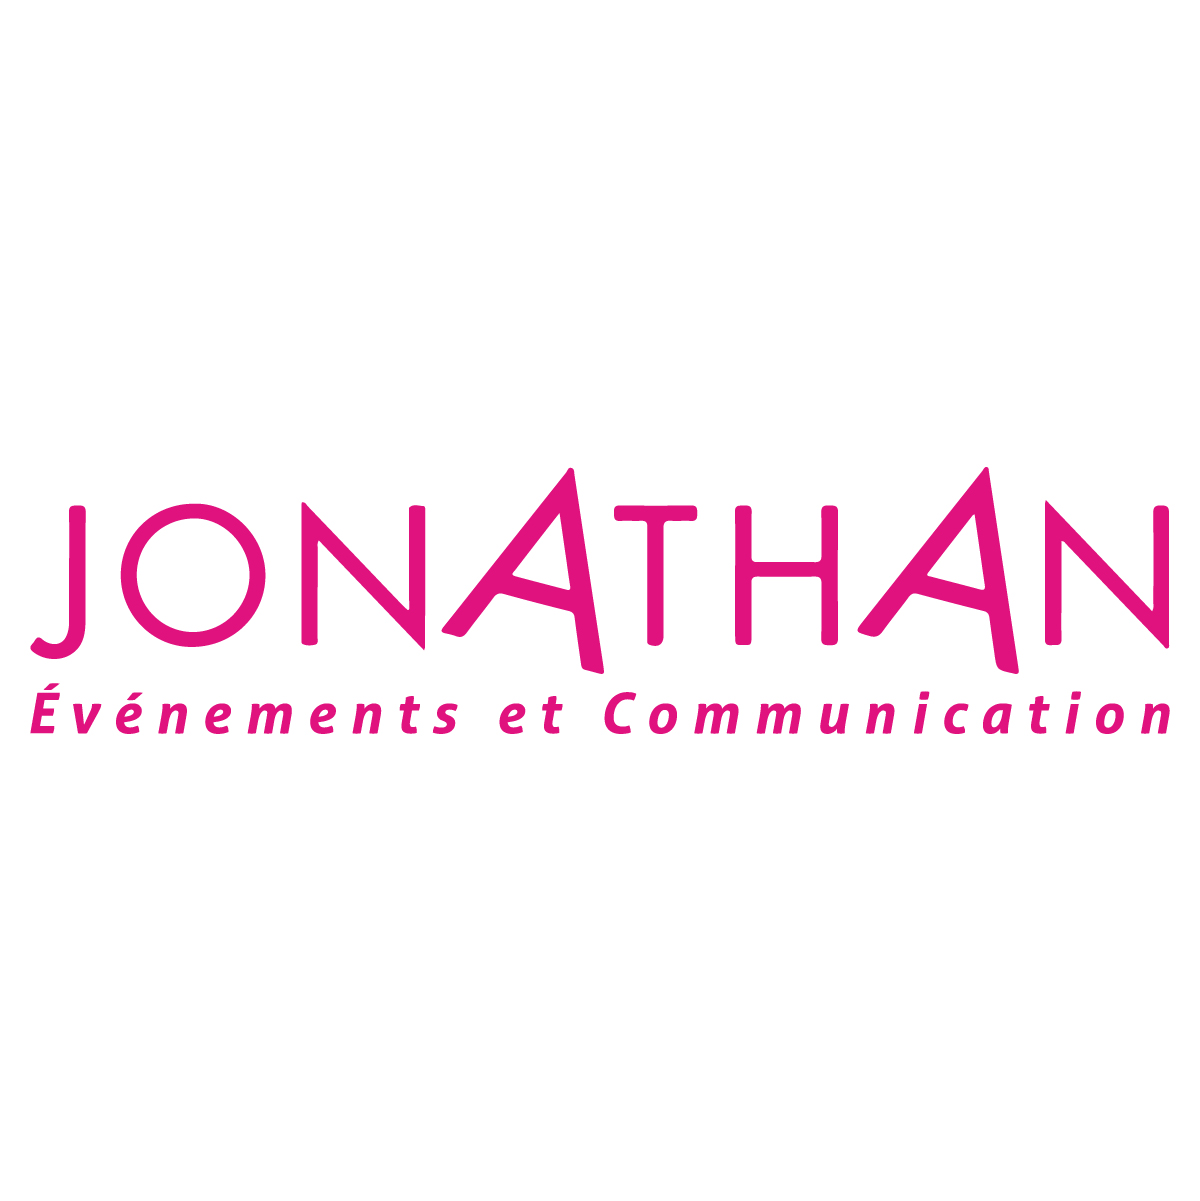 (c) Jonathan-evenements.com